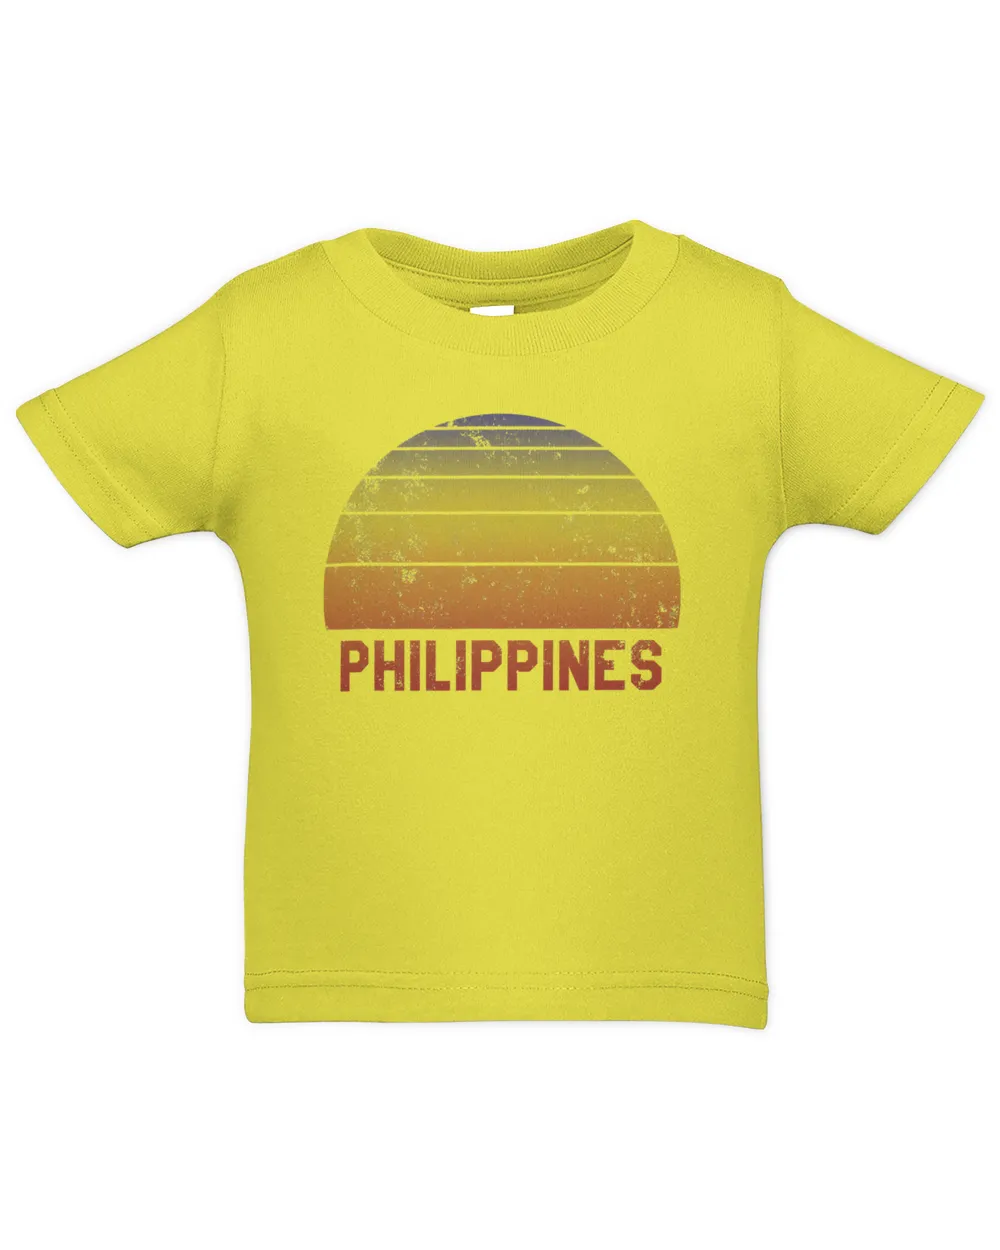 Philippines Retro Vintage T Shirt 70s Throwback Surf Tee